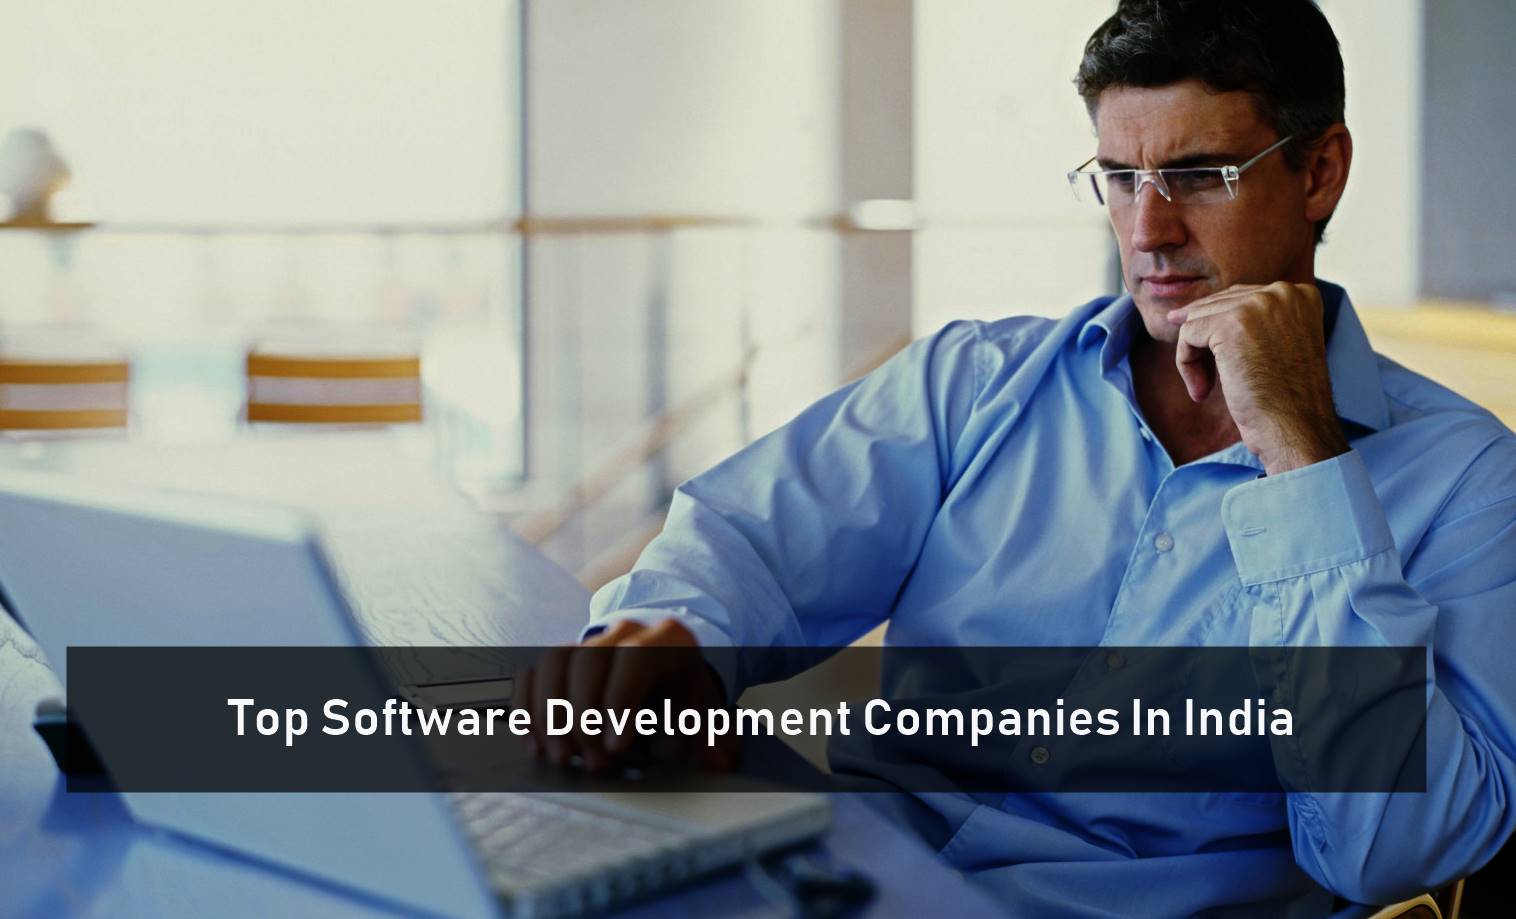 Top Software Development Companies In India